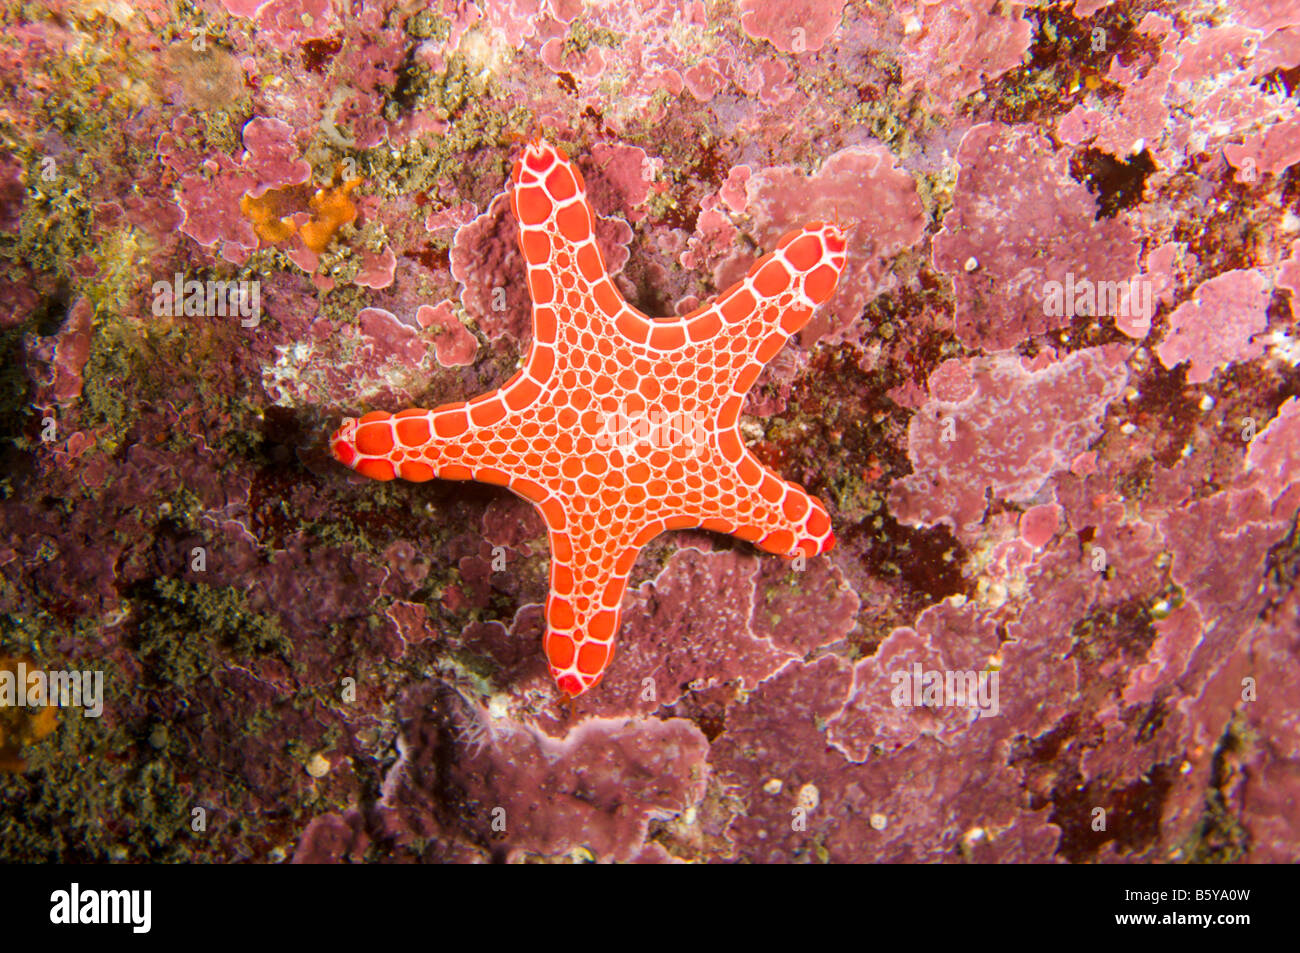 Red Brick Sea Star, Pentagonaster duebeni, in Sydney Harbour Stock Photo